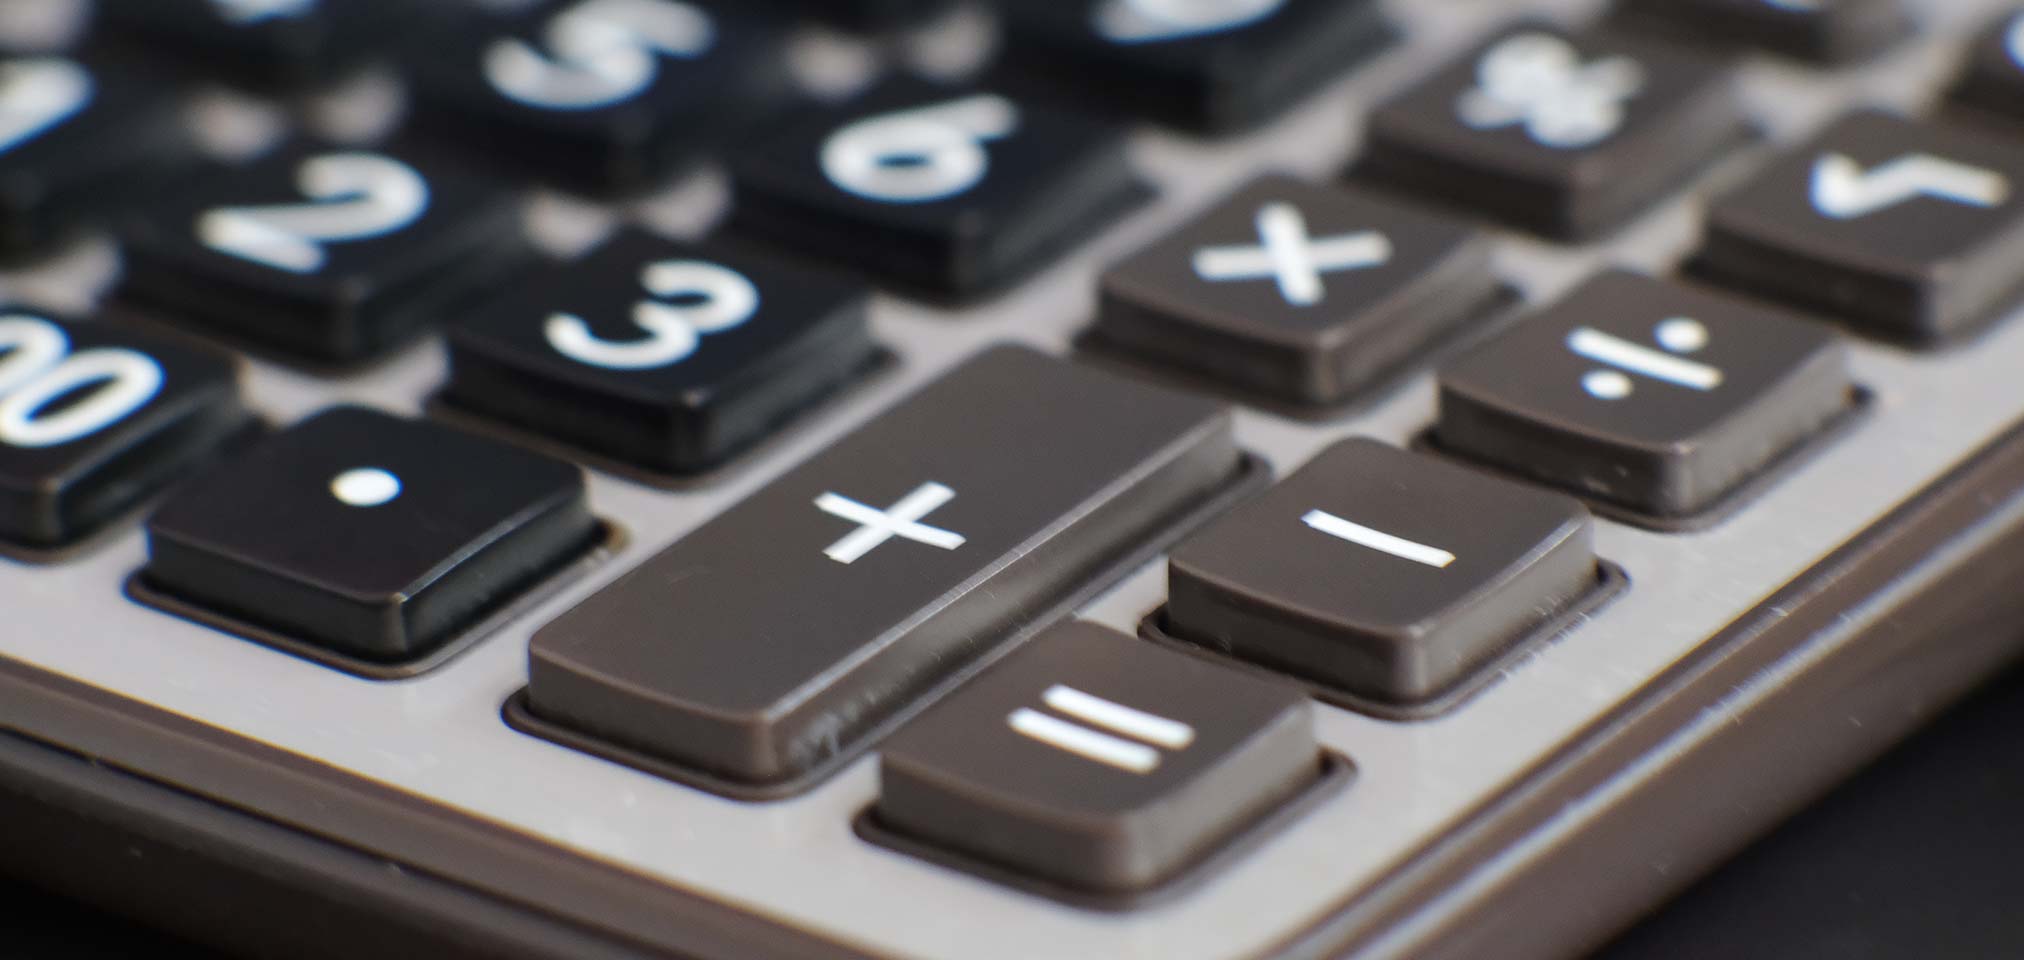 close up image of a calculator